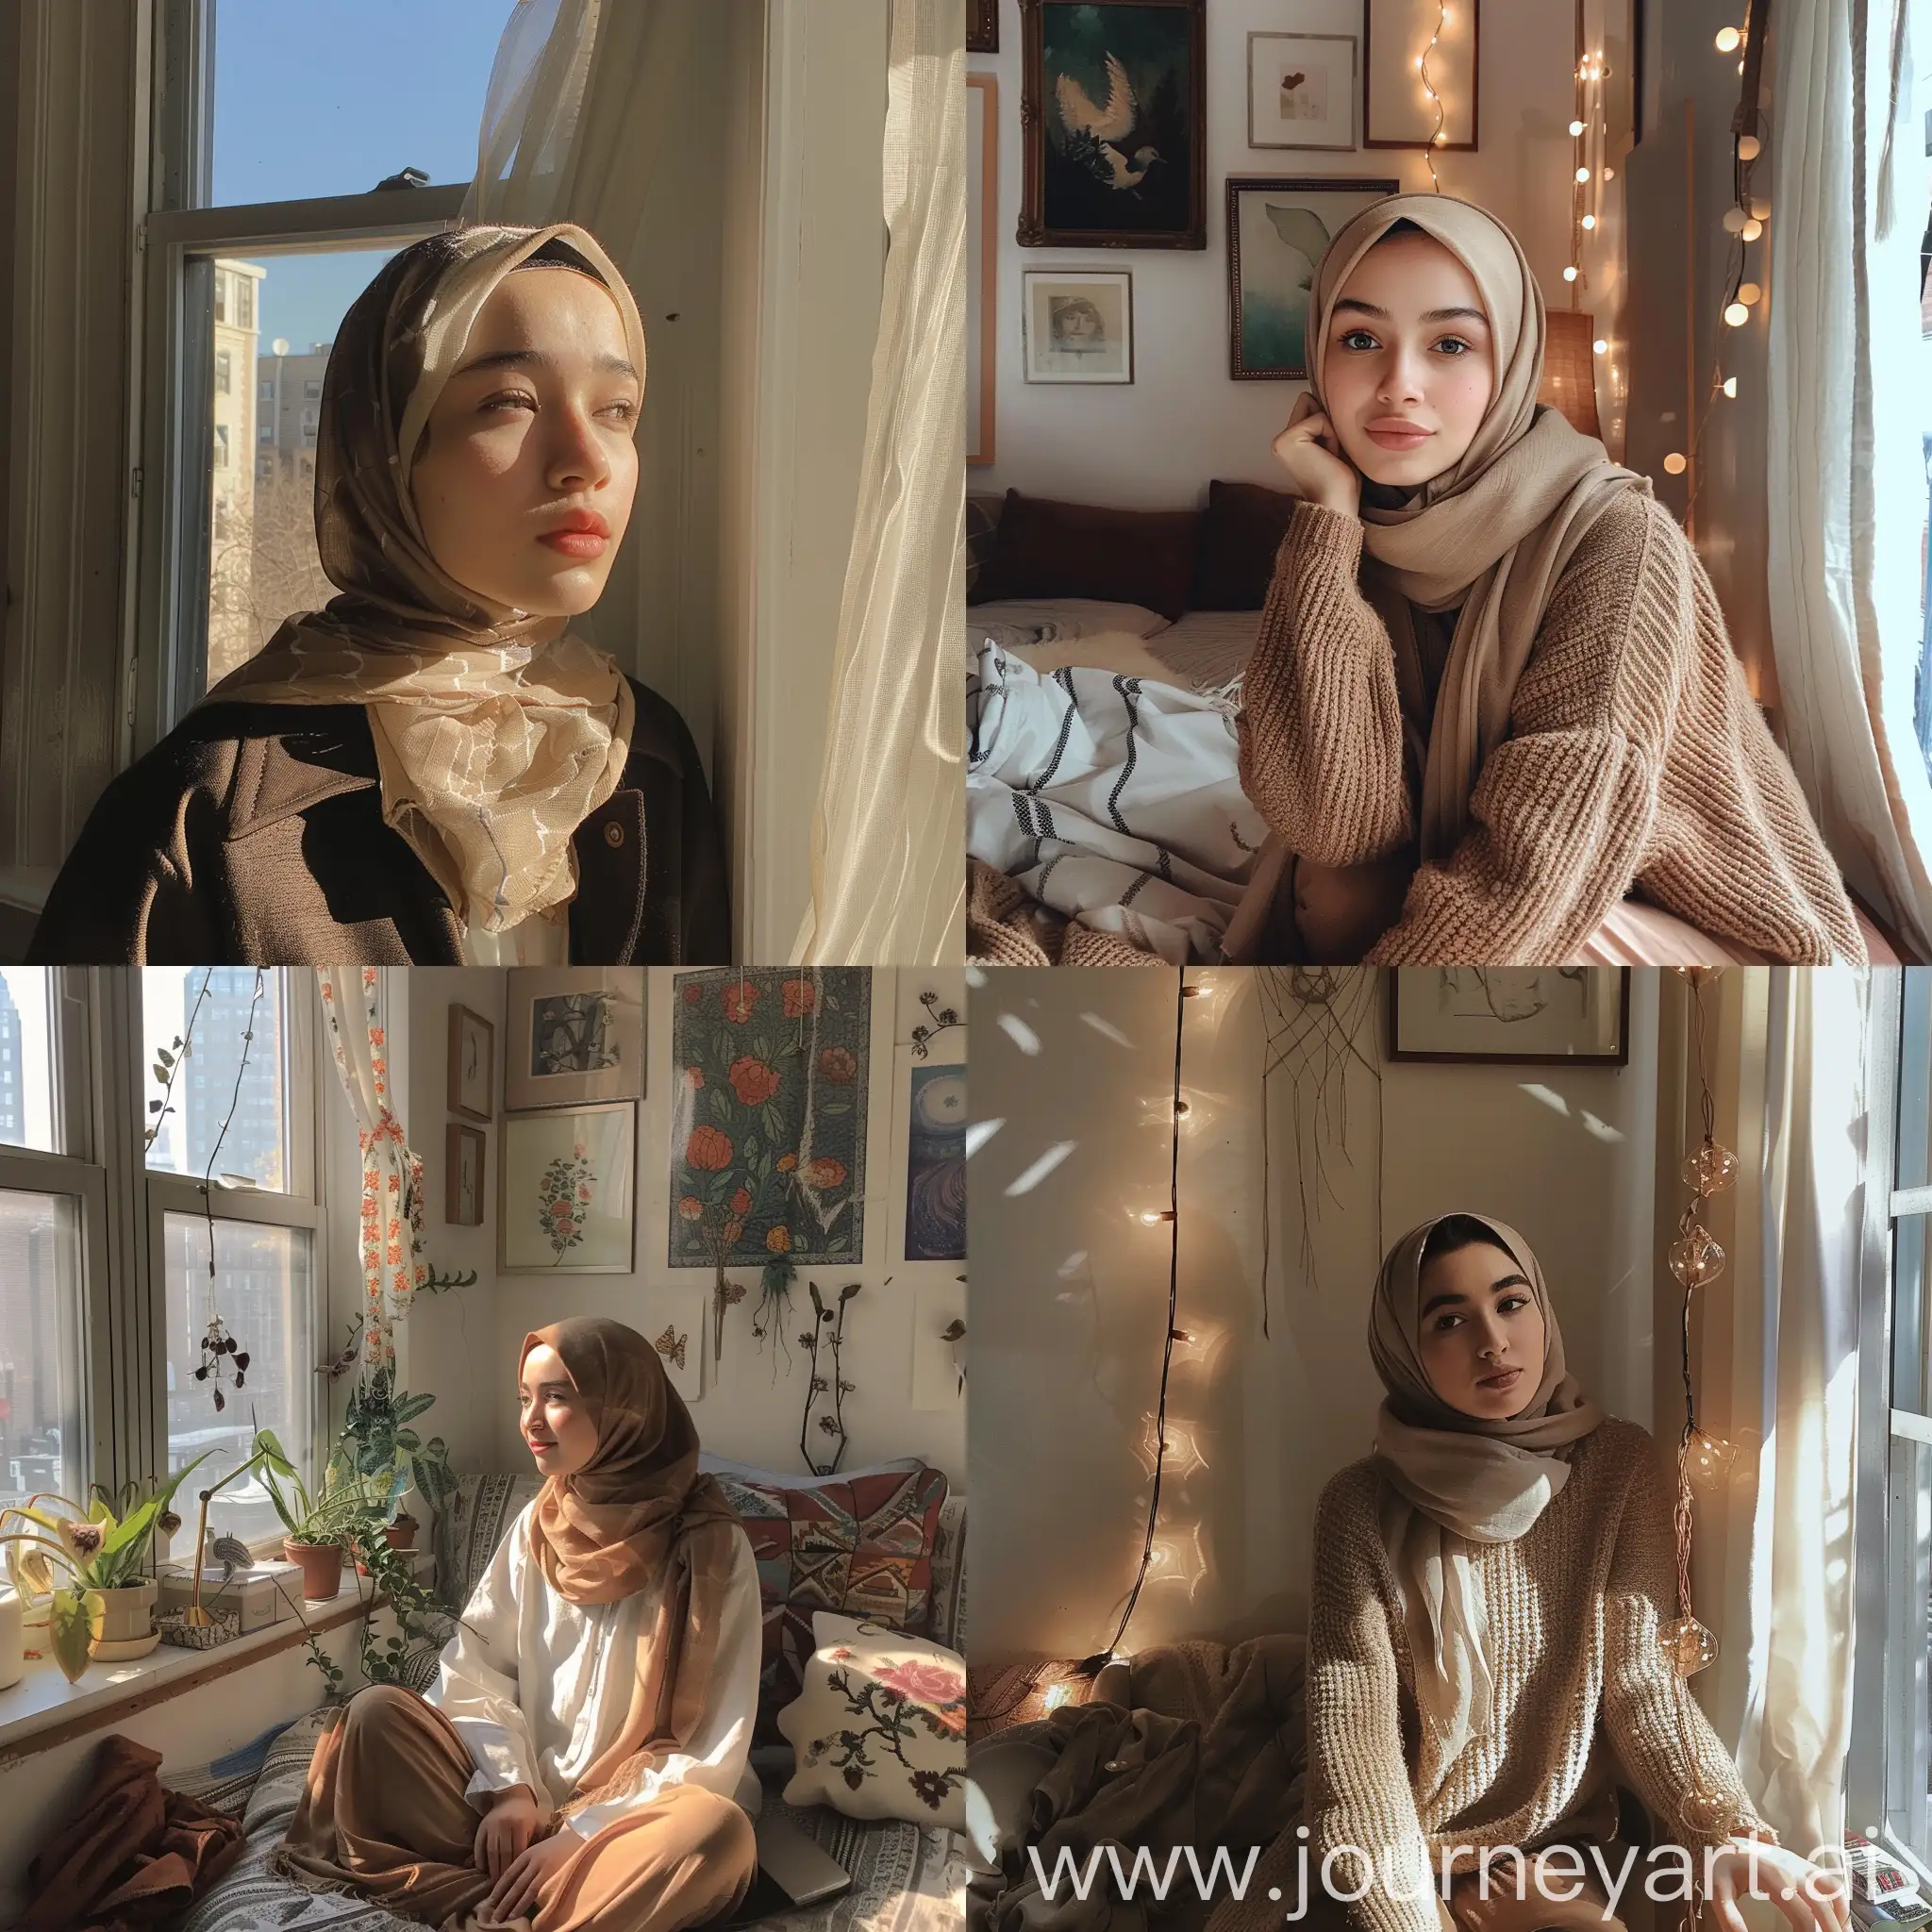 Aesthetic Instagram self, adorable, beautiful girl hijab, cute, NYC apartment 